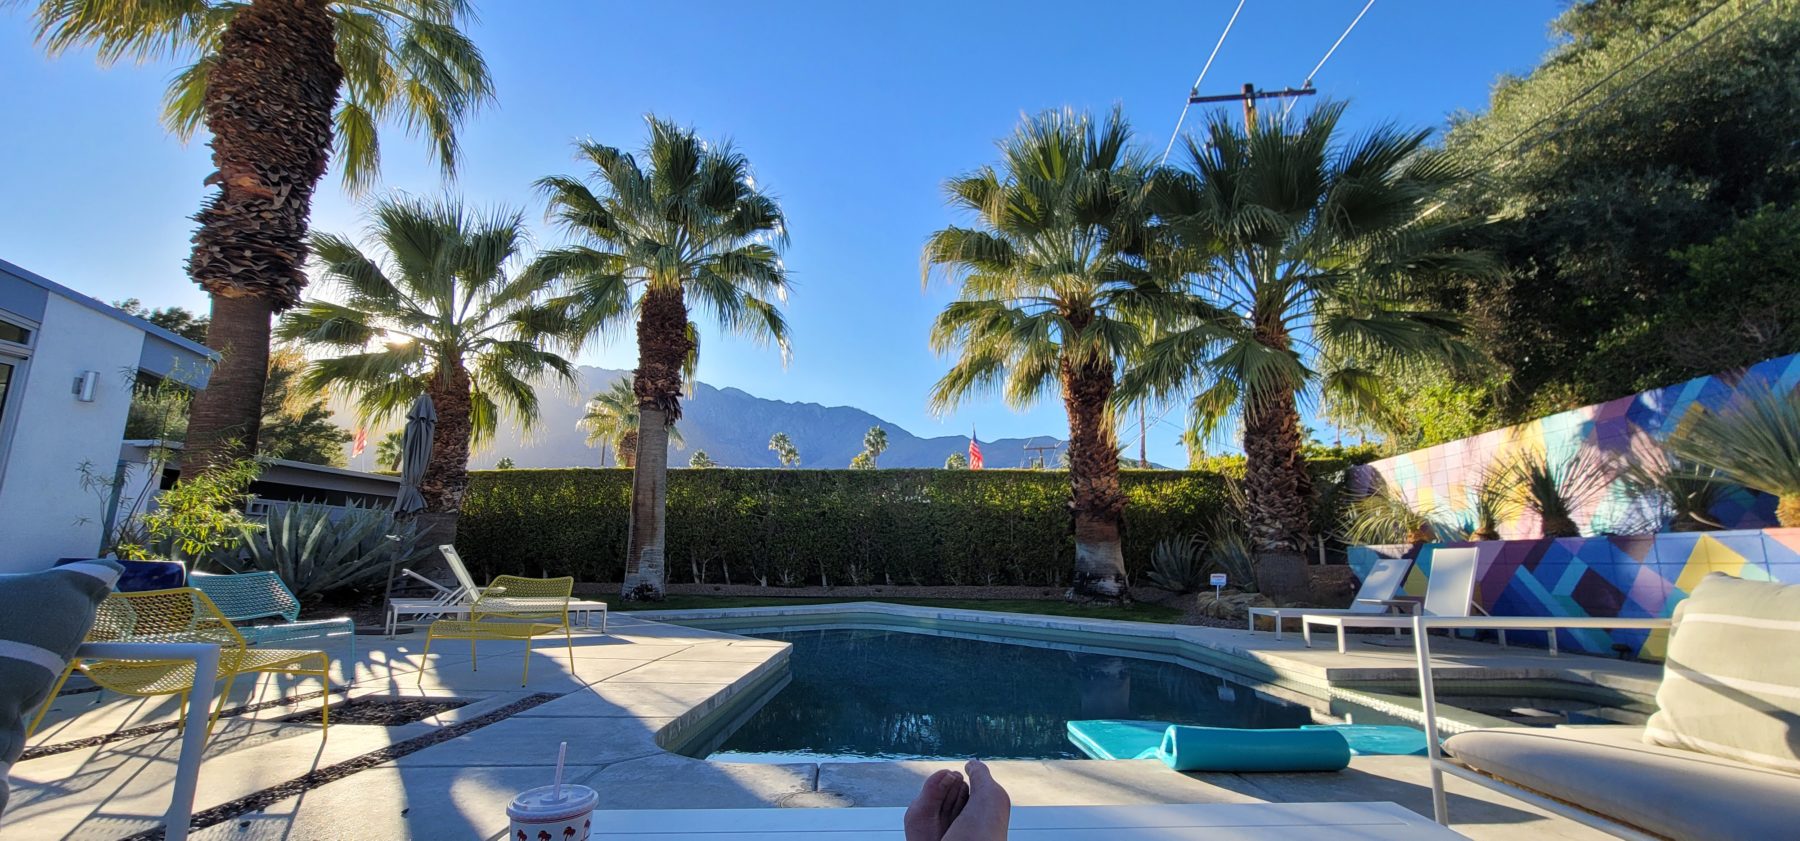 Grant sitting poolside in Palm Springs